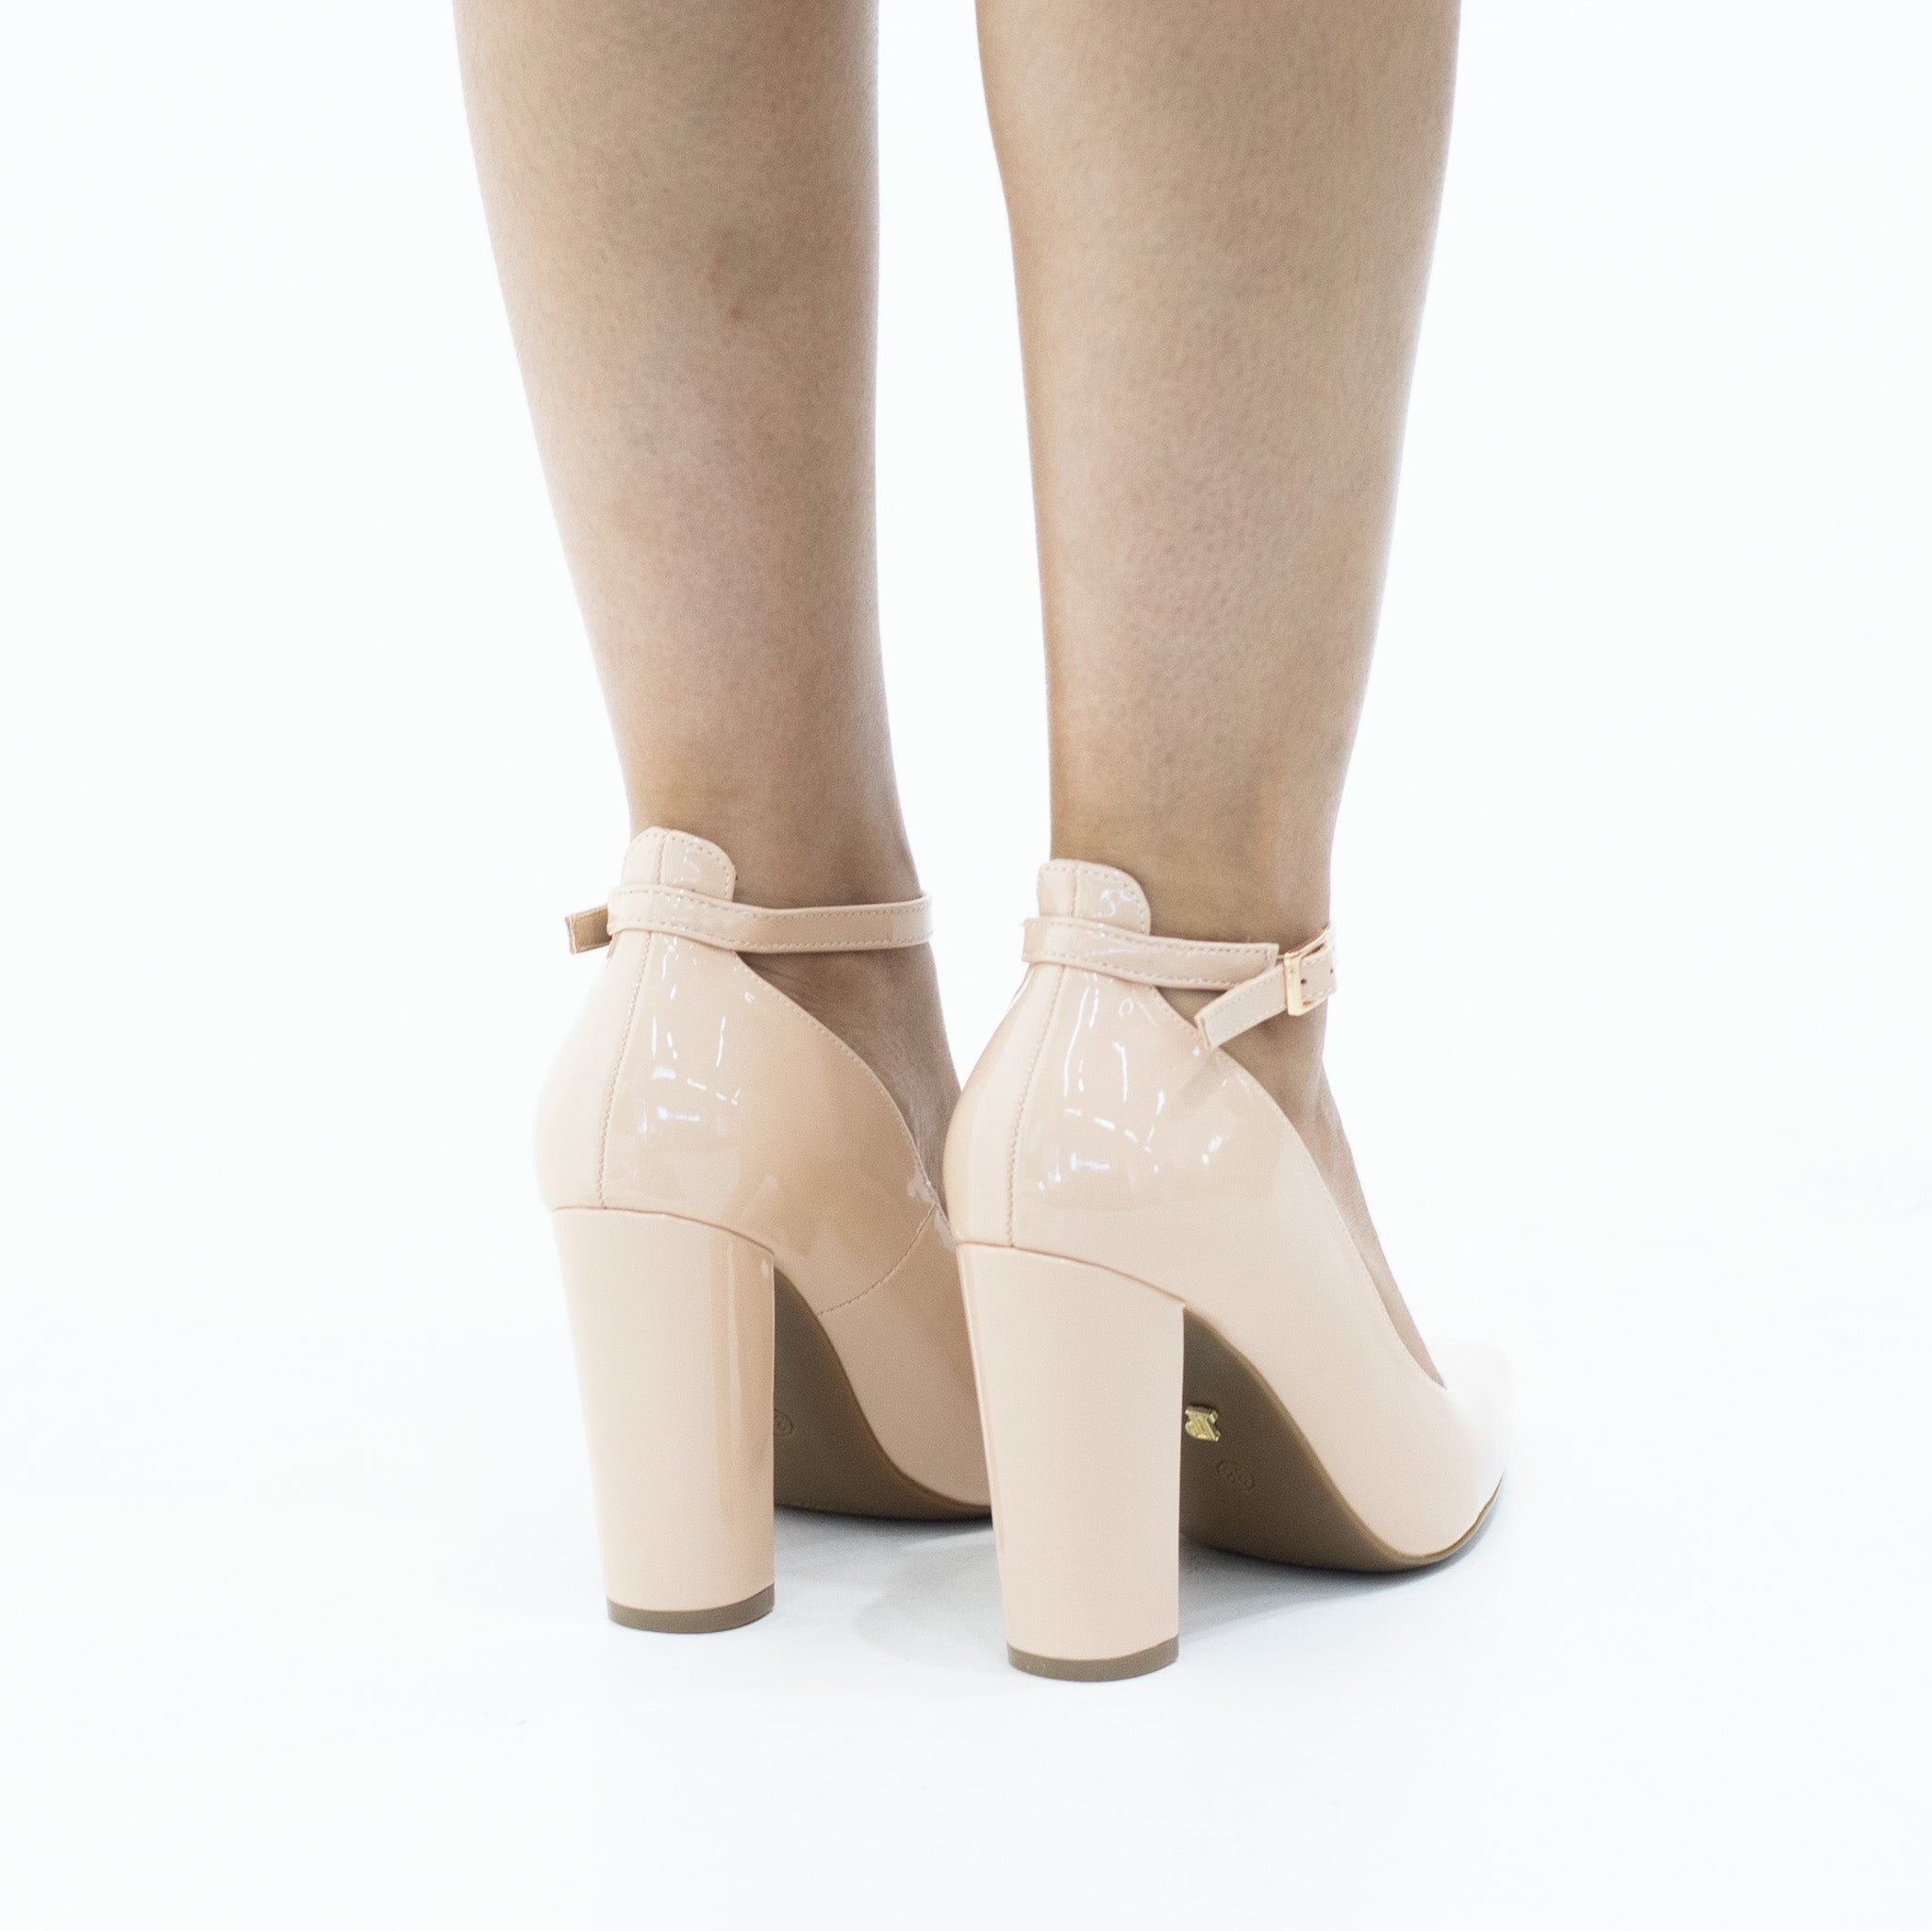 Beige ankle strap pat court shoe on 10cm heel major